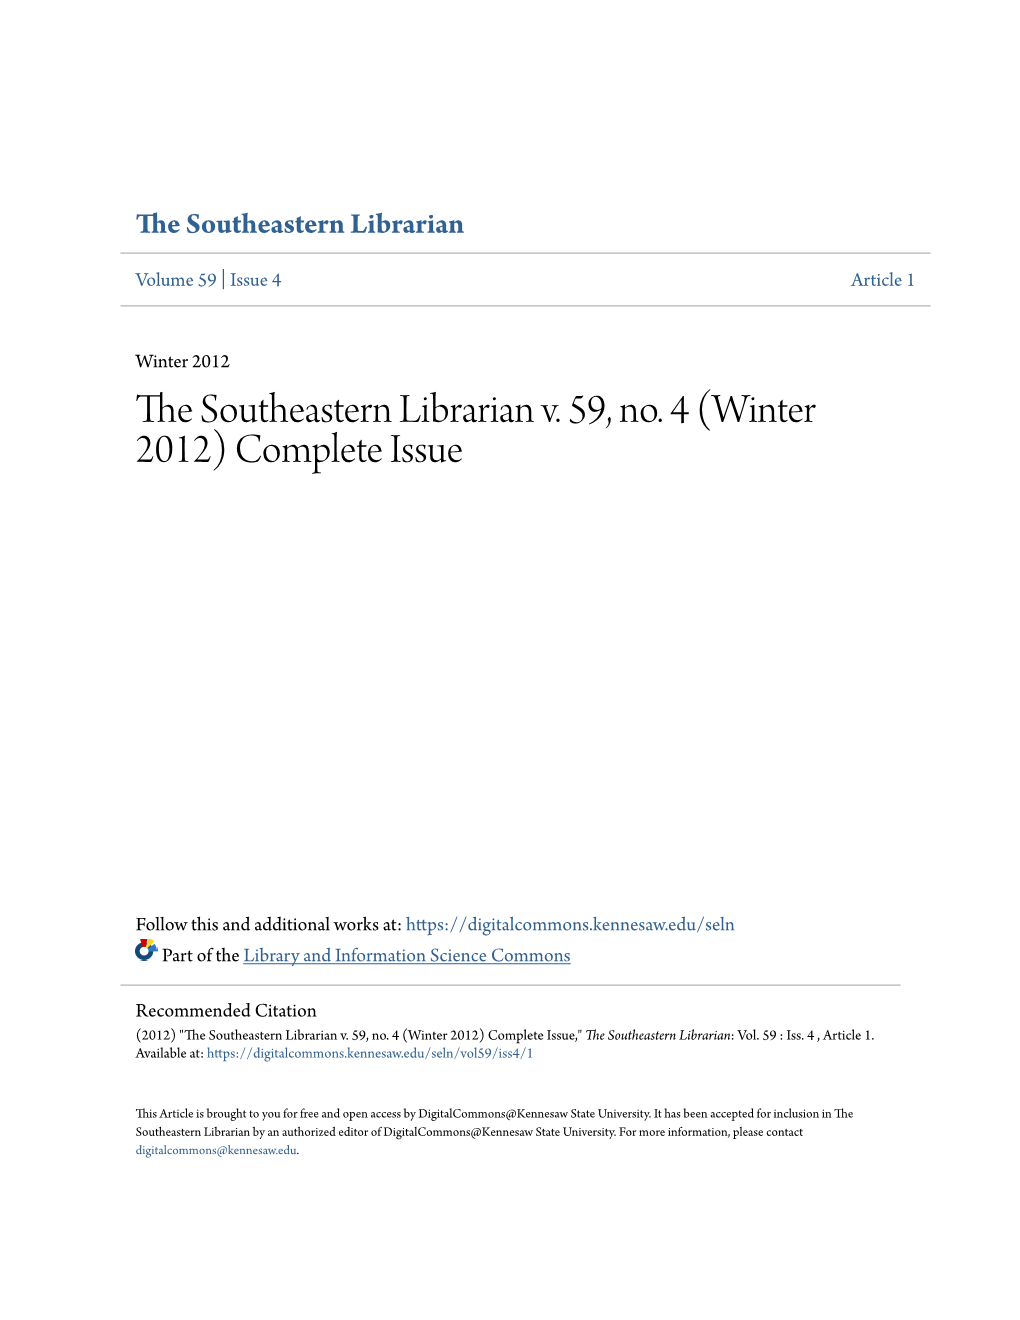 The Southeastern Librarian V. 59, No. 4